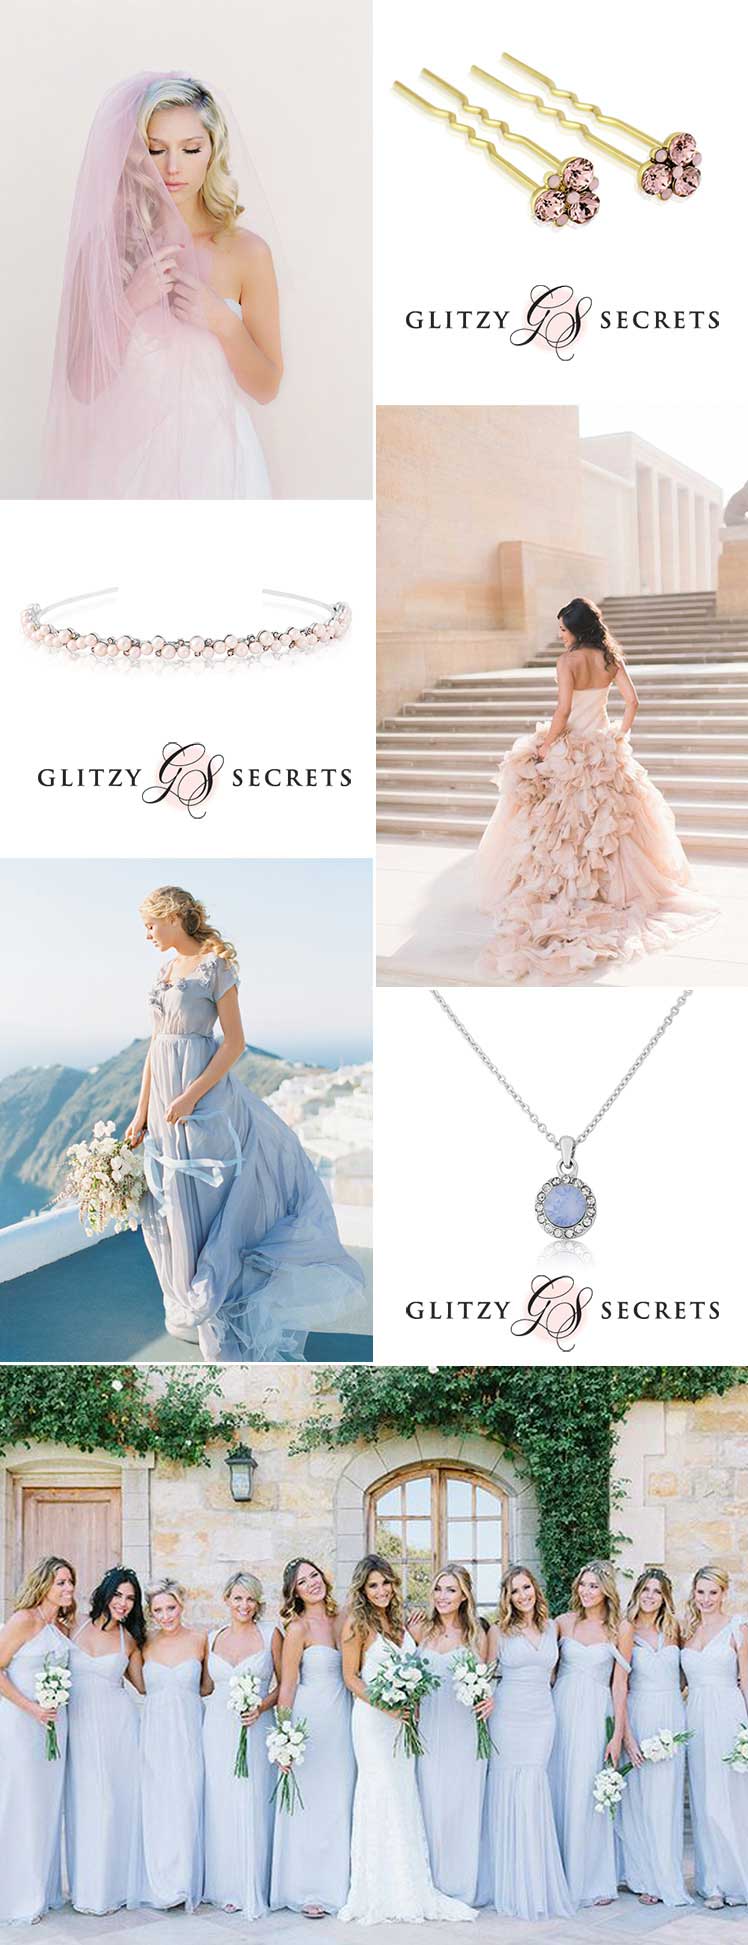 Pantone Rose Quartz and Serenity wedding colour scheme ideas